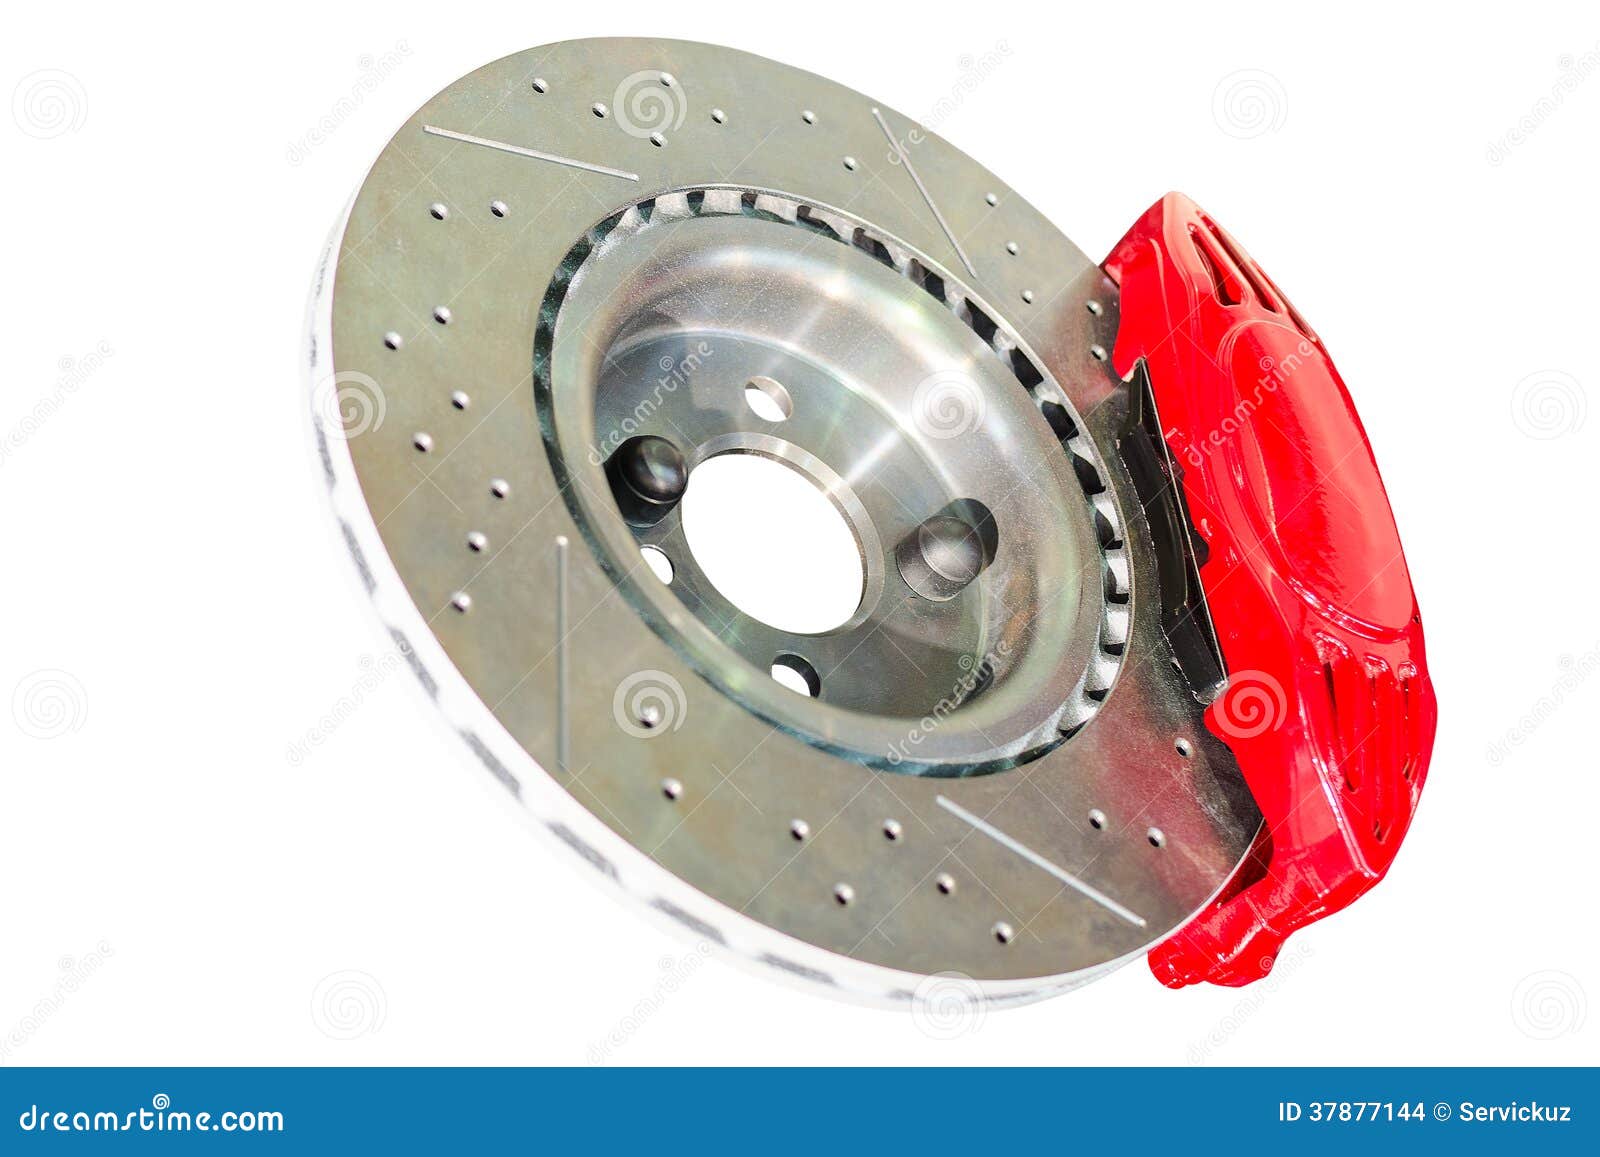 assembled caliper disc and pads of car brake system